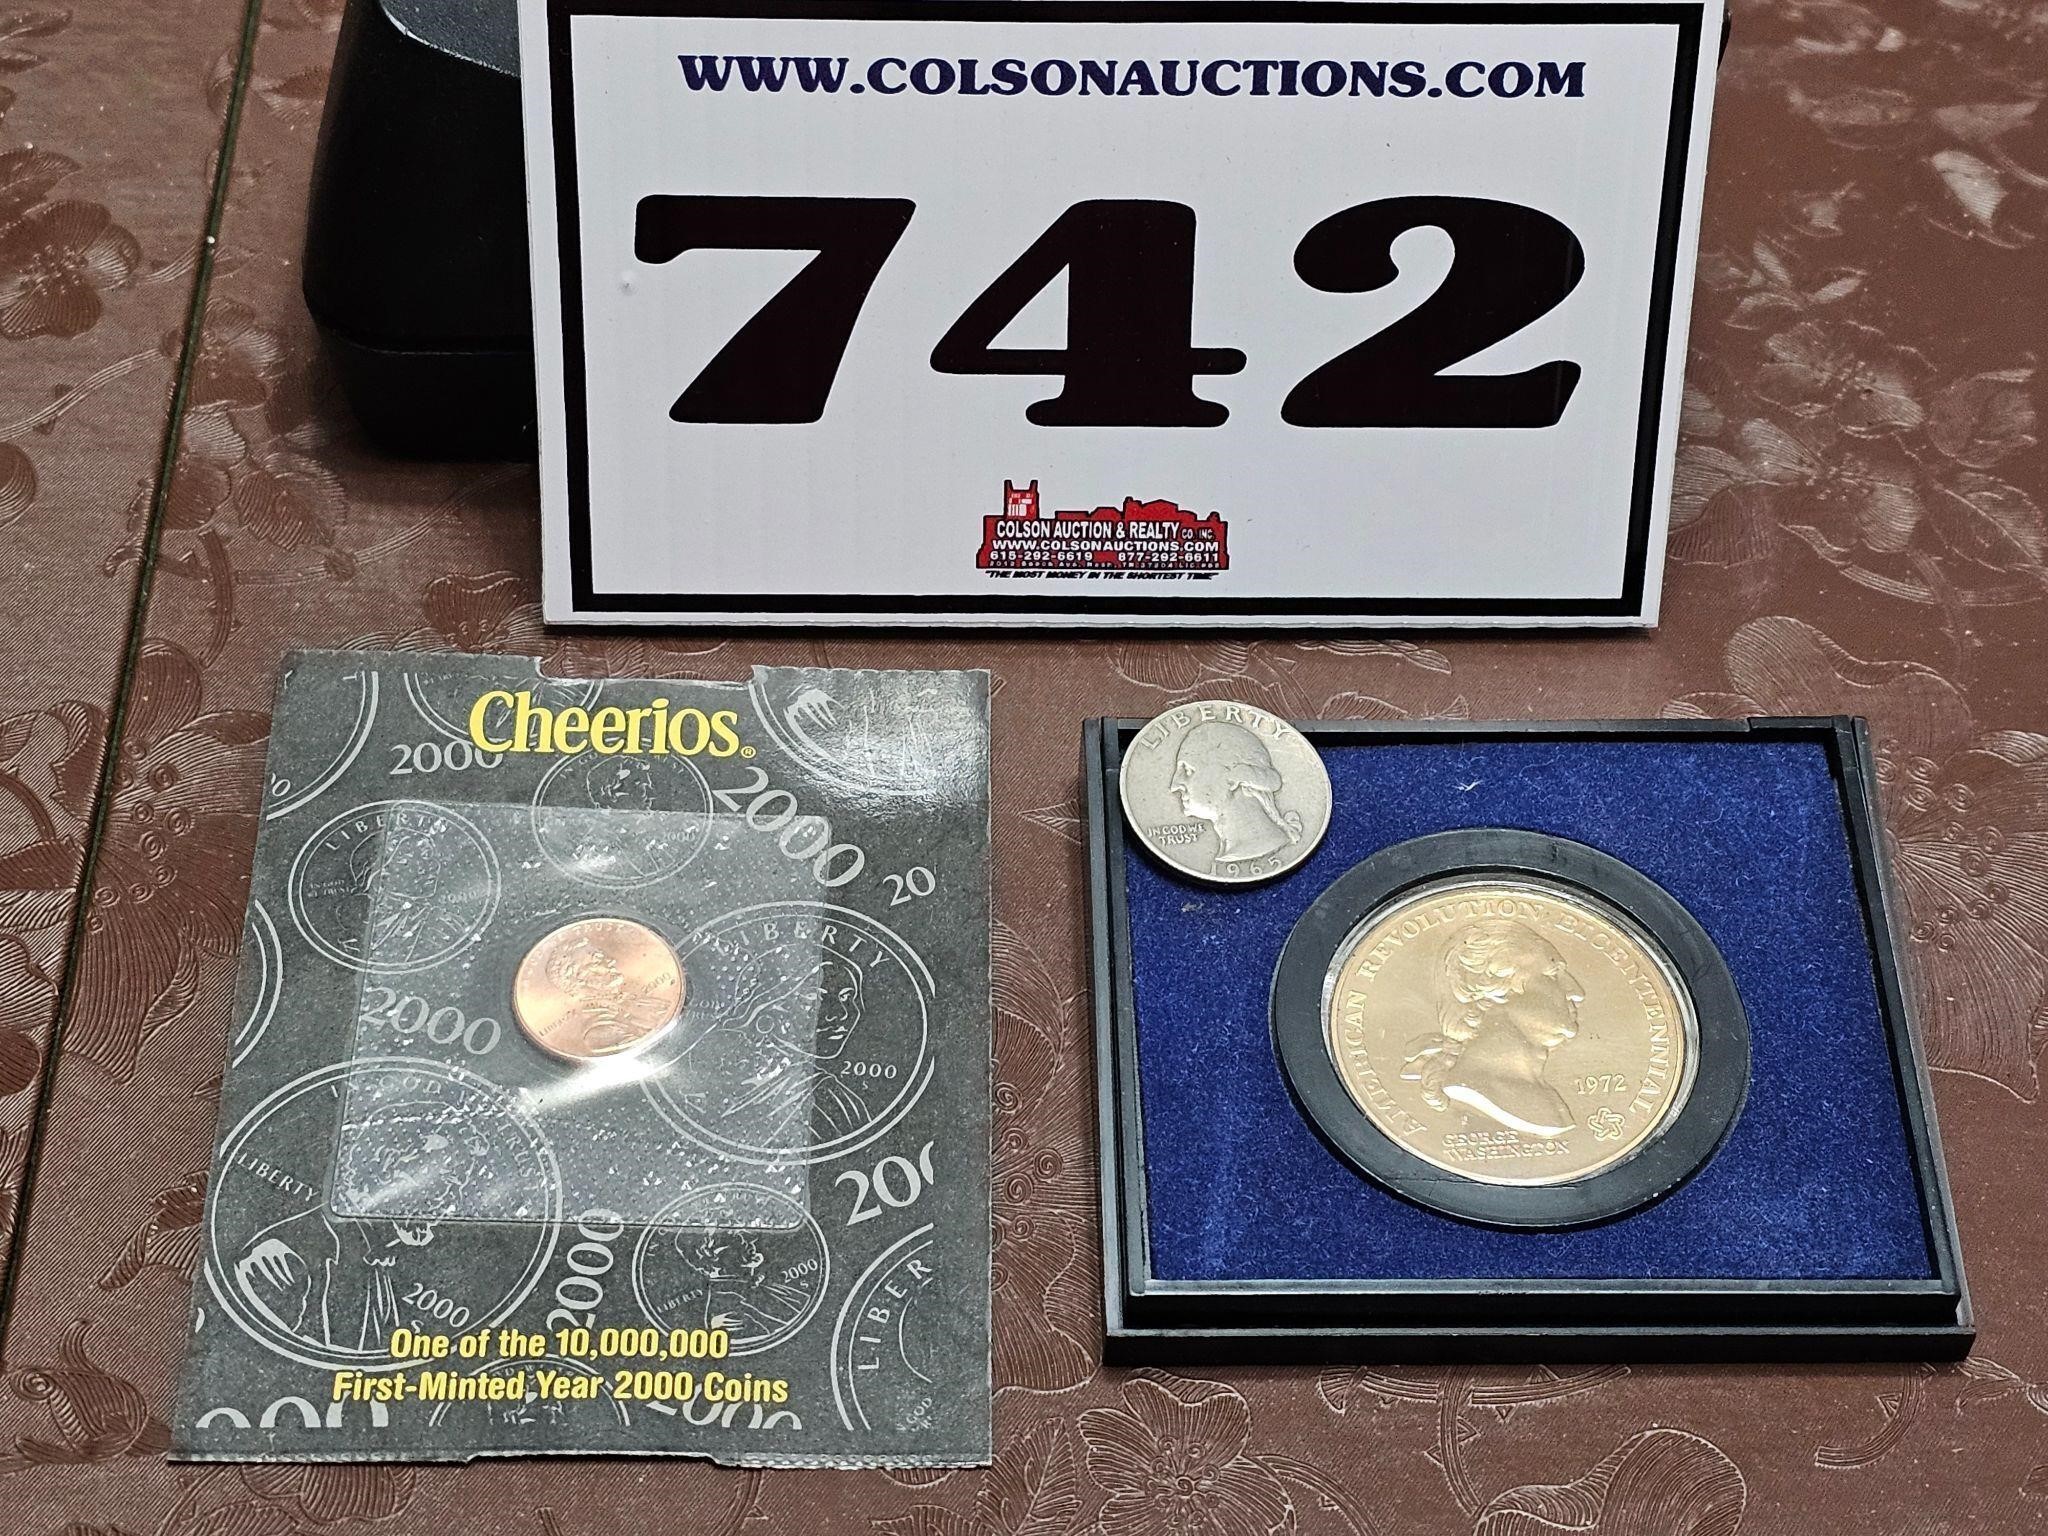 1965 quarter, 72 Commemorative, & Cheerios penny